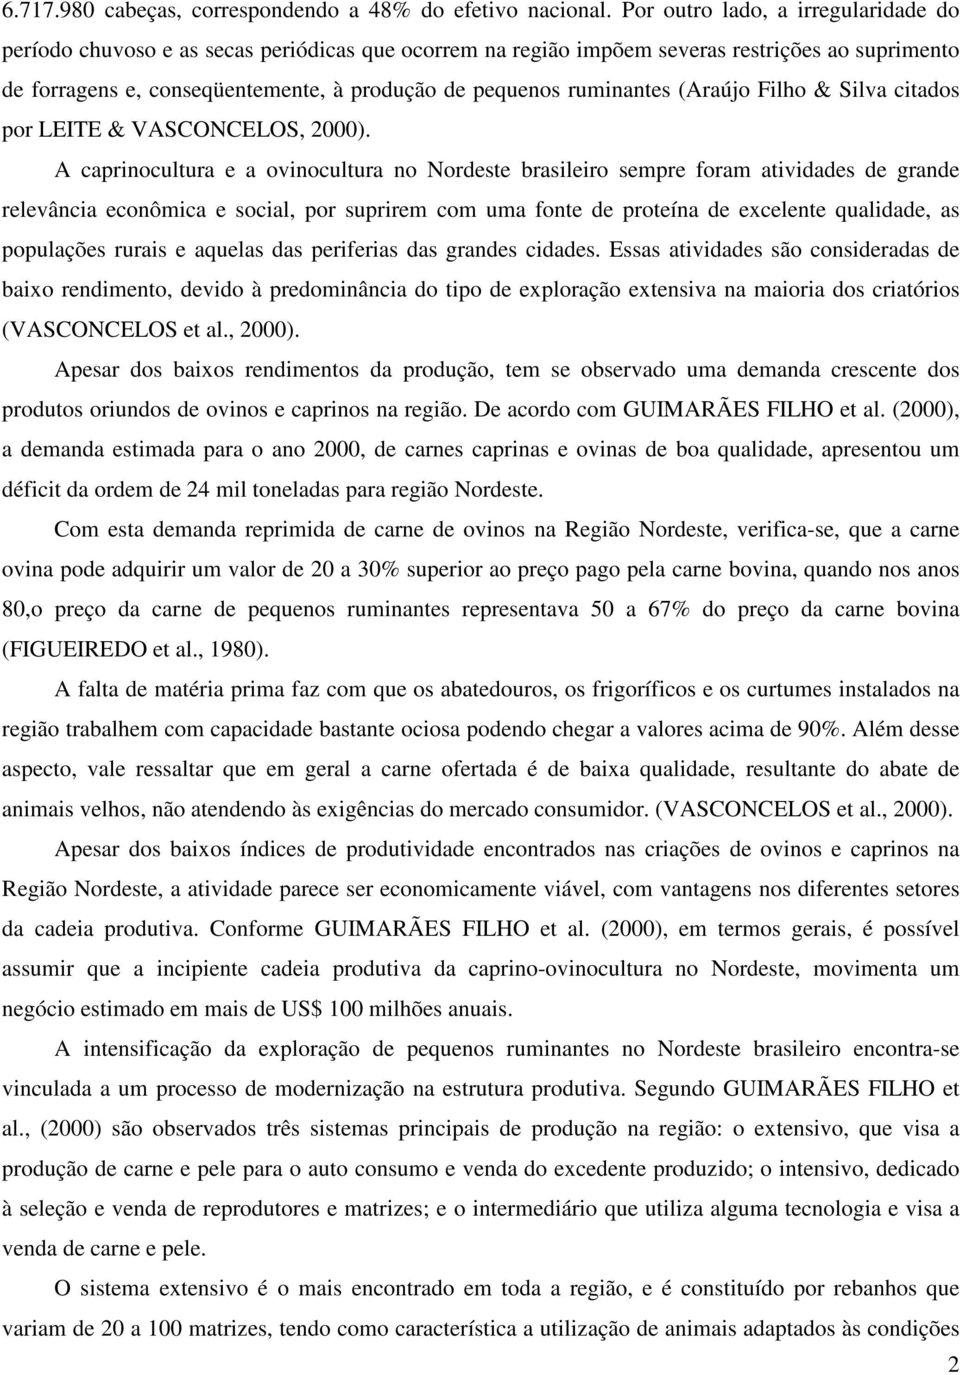 ruminantes (Araújo Filho & Silva citados por LEITE & VASCONCELOS, 2000).